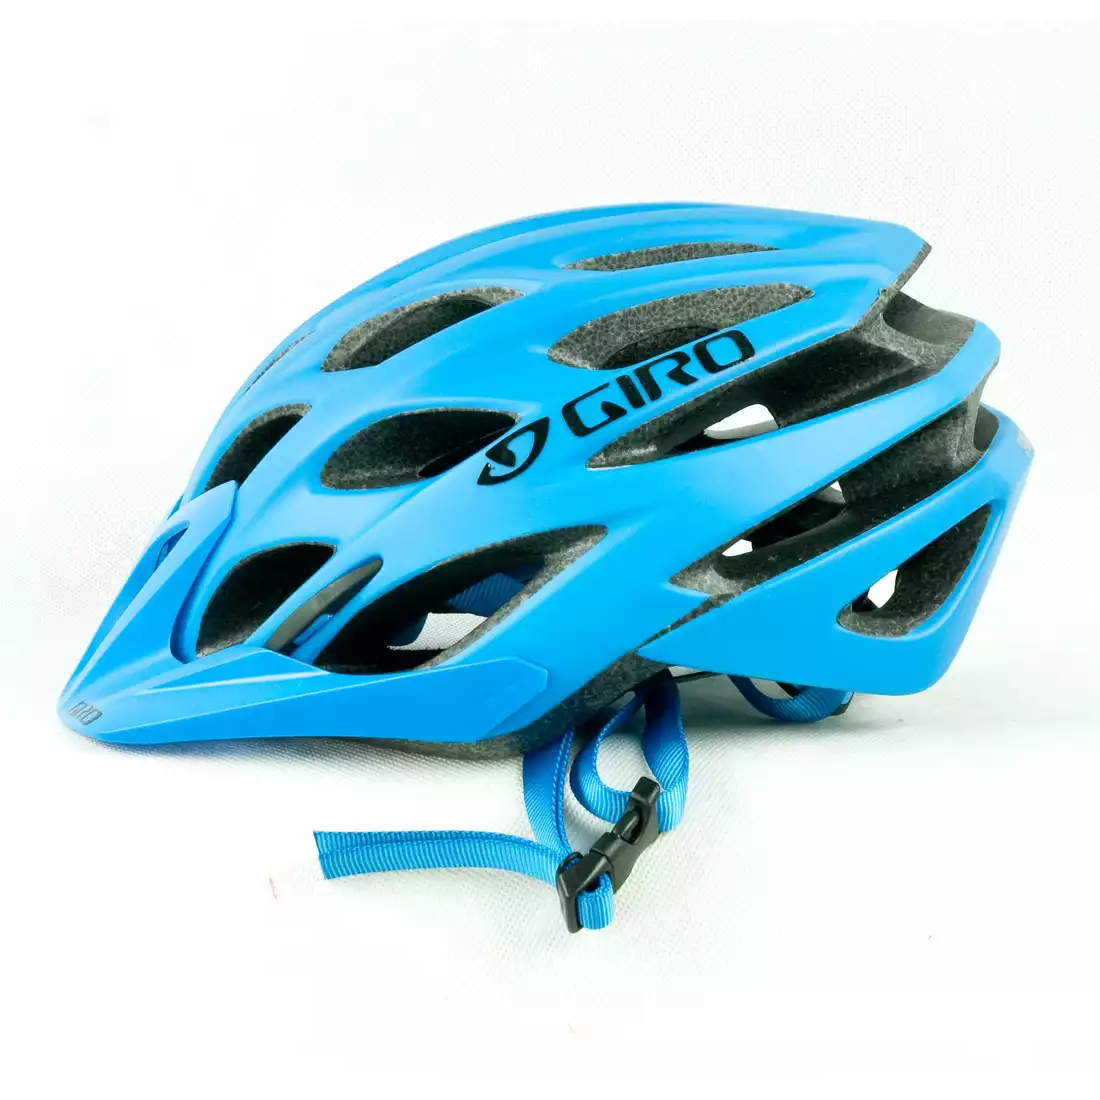 GIRO PHASE - kask rowerowy, niebieski mat